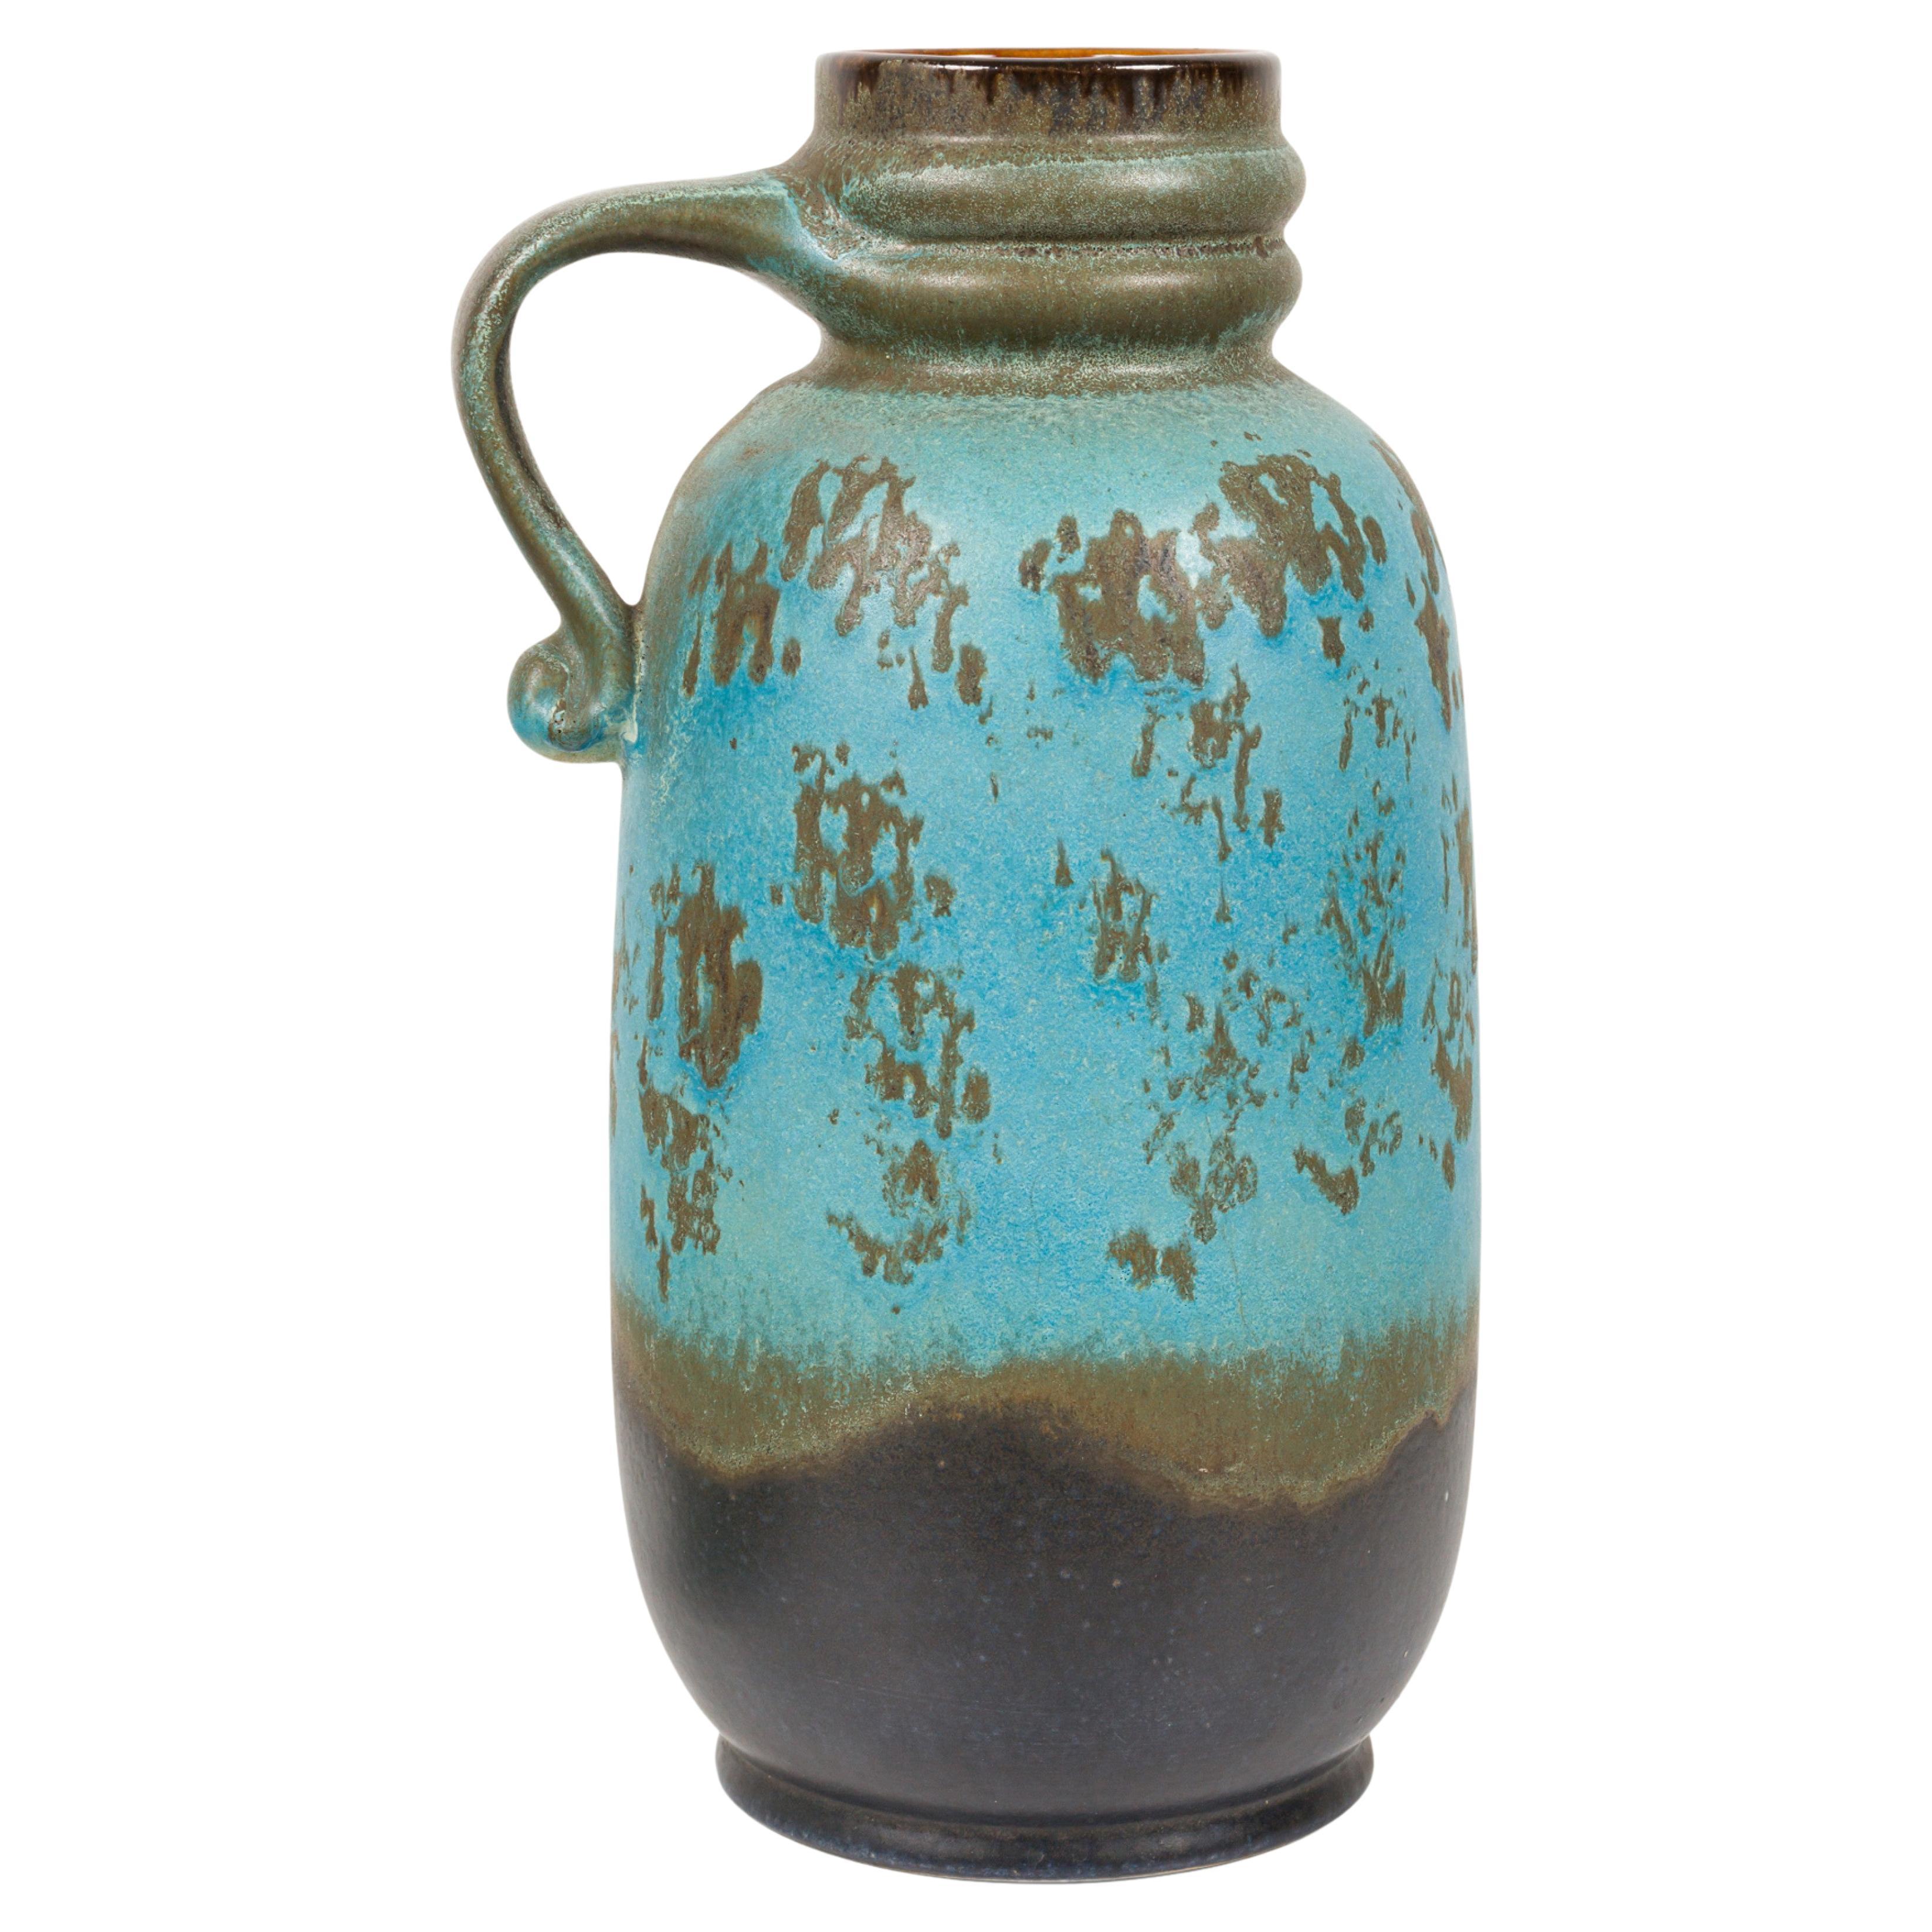 Jasba Keramik West German Mid-Century Teal and Gray Glazed Ceramic Vase For Sale